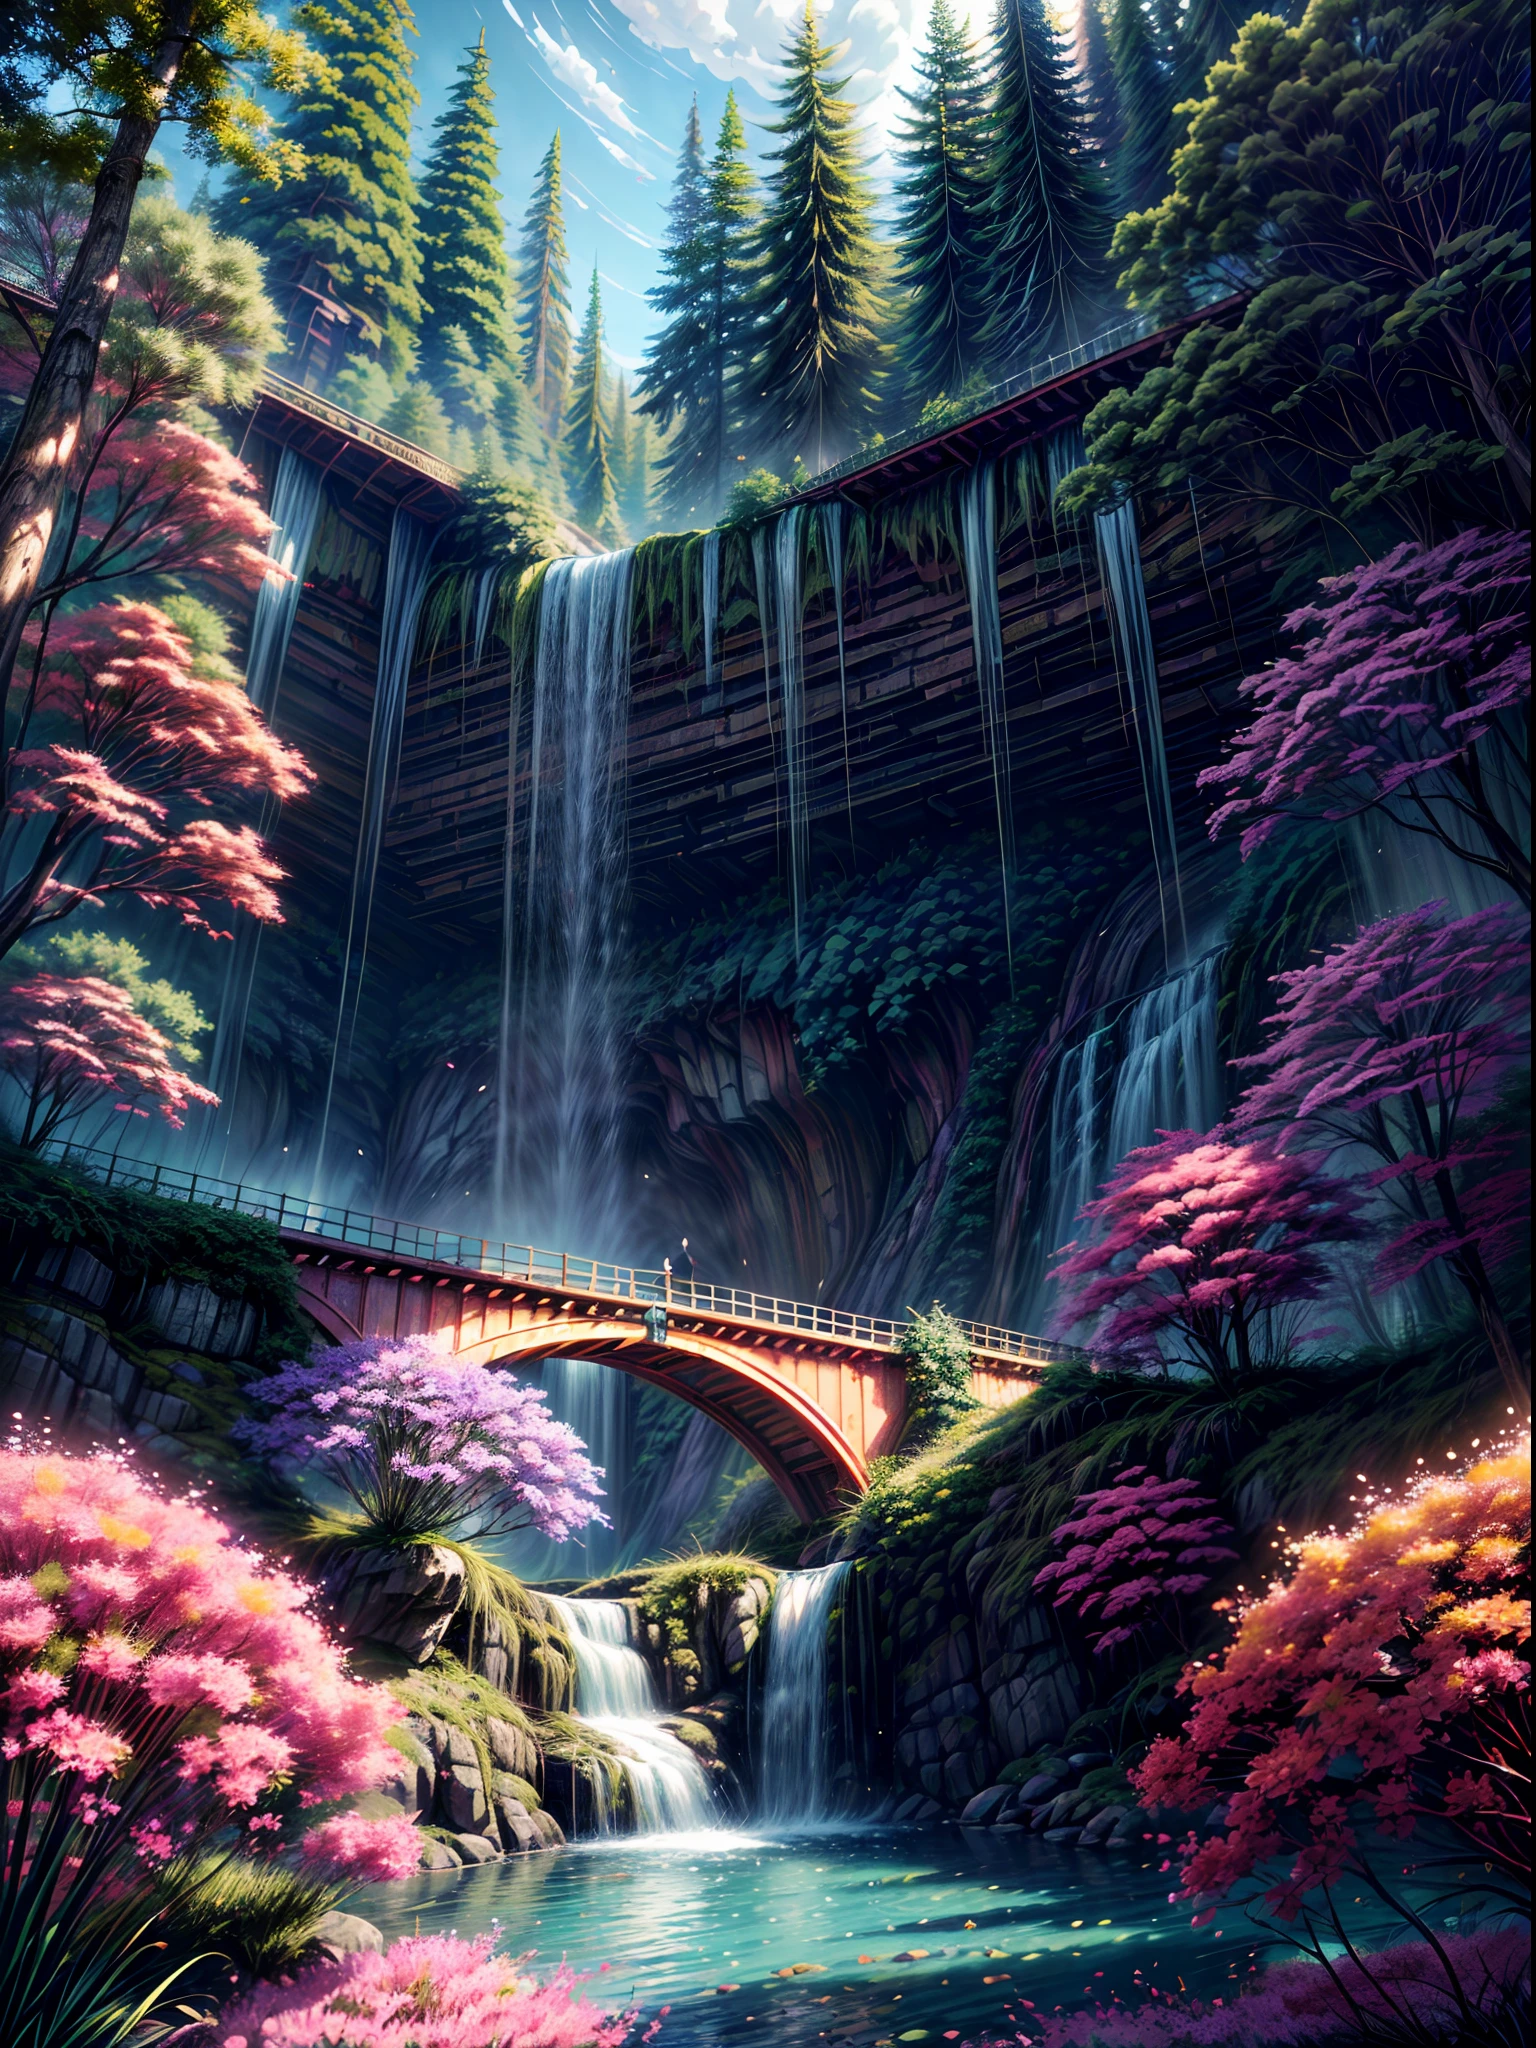 A beautiful bio朋克 waterfall in nature, 丰富多彩的, 花朵, 松树, 一座悬索桥, 朋克, 哔哔声.